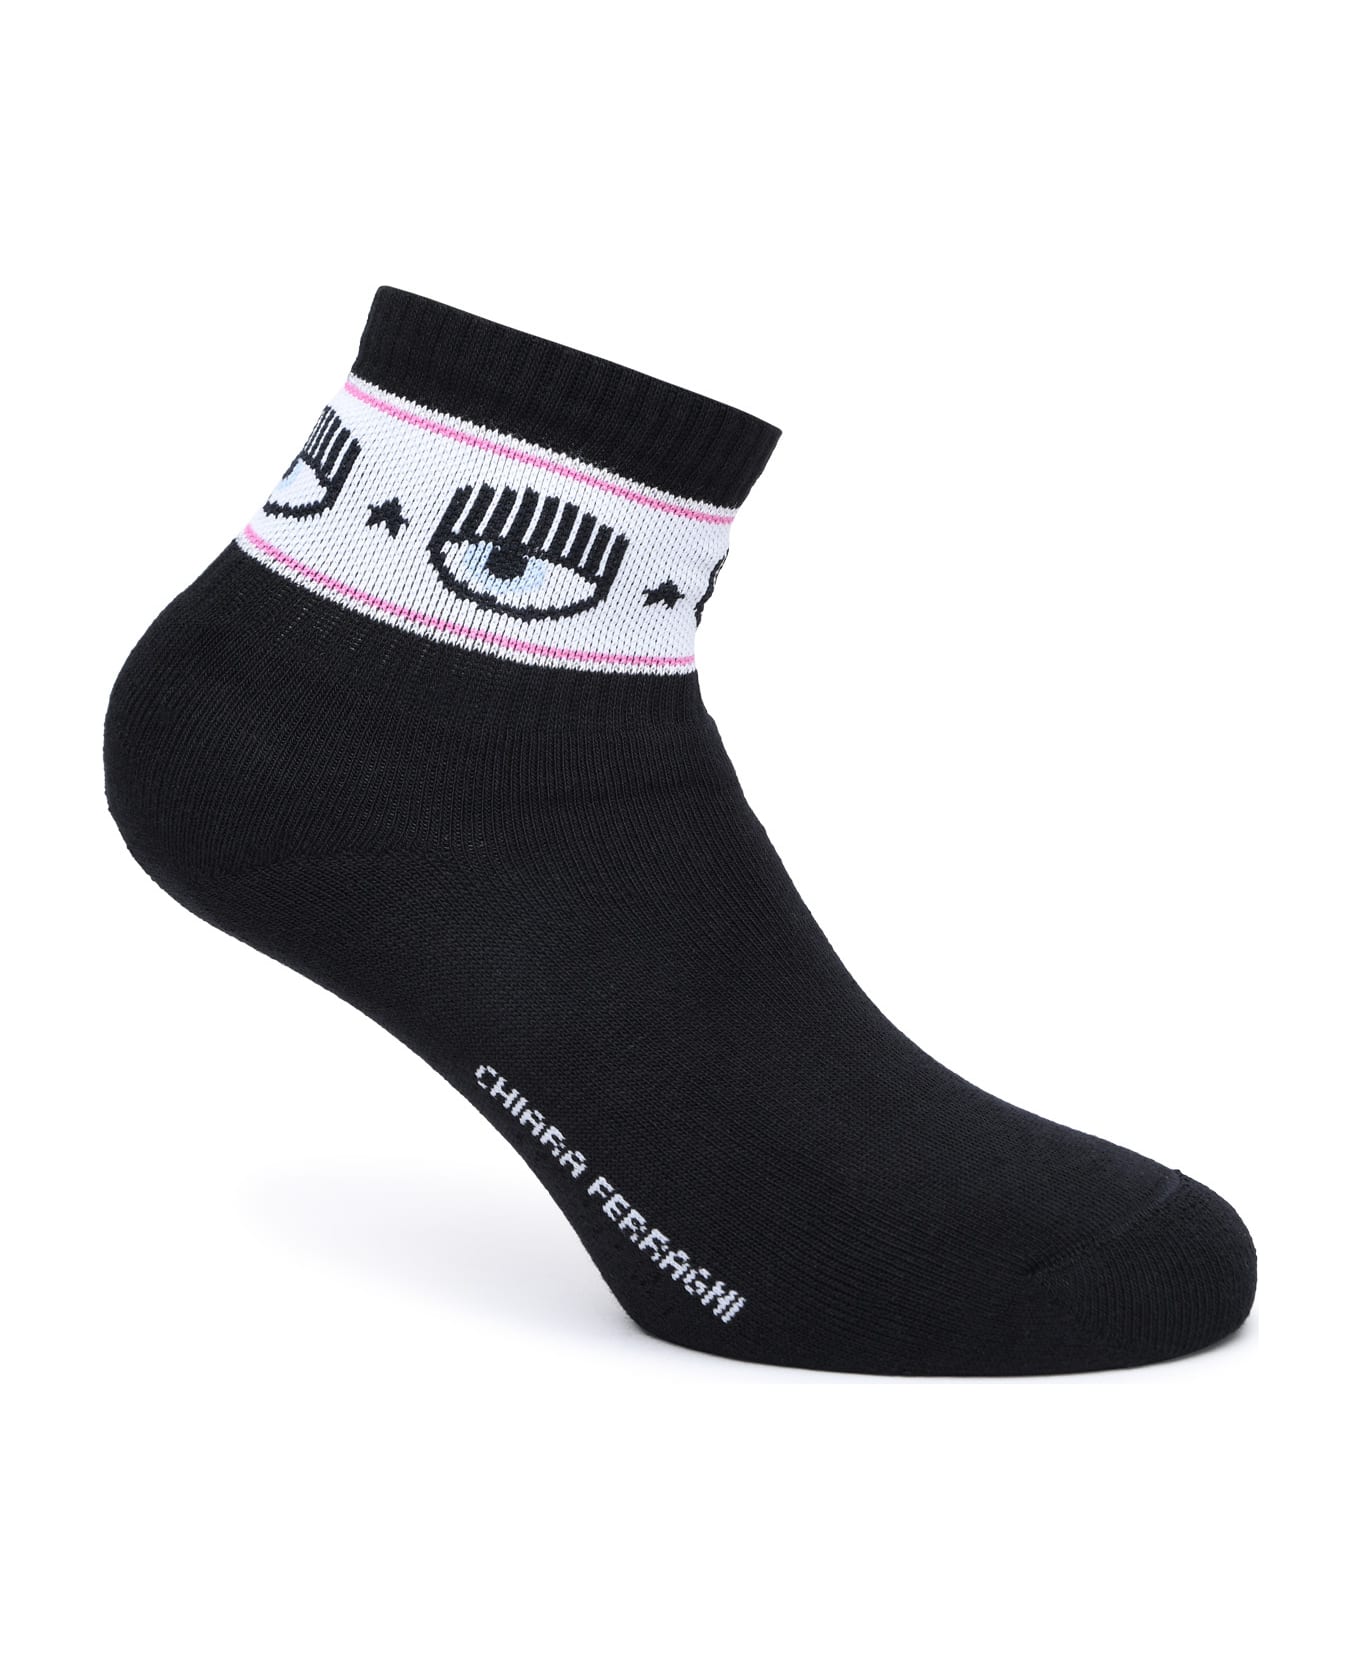 Chiara Ferragni Black Cotton Blend Socks - Black